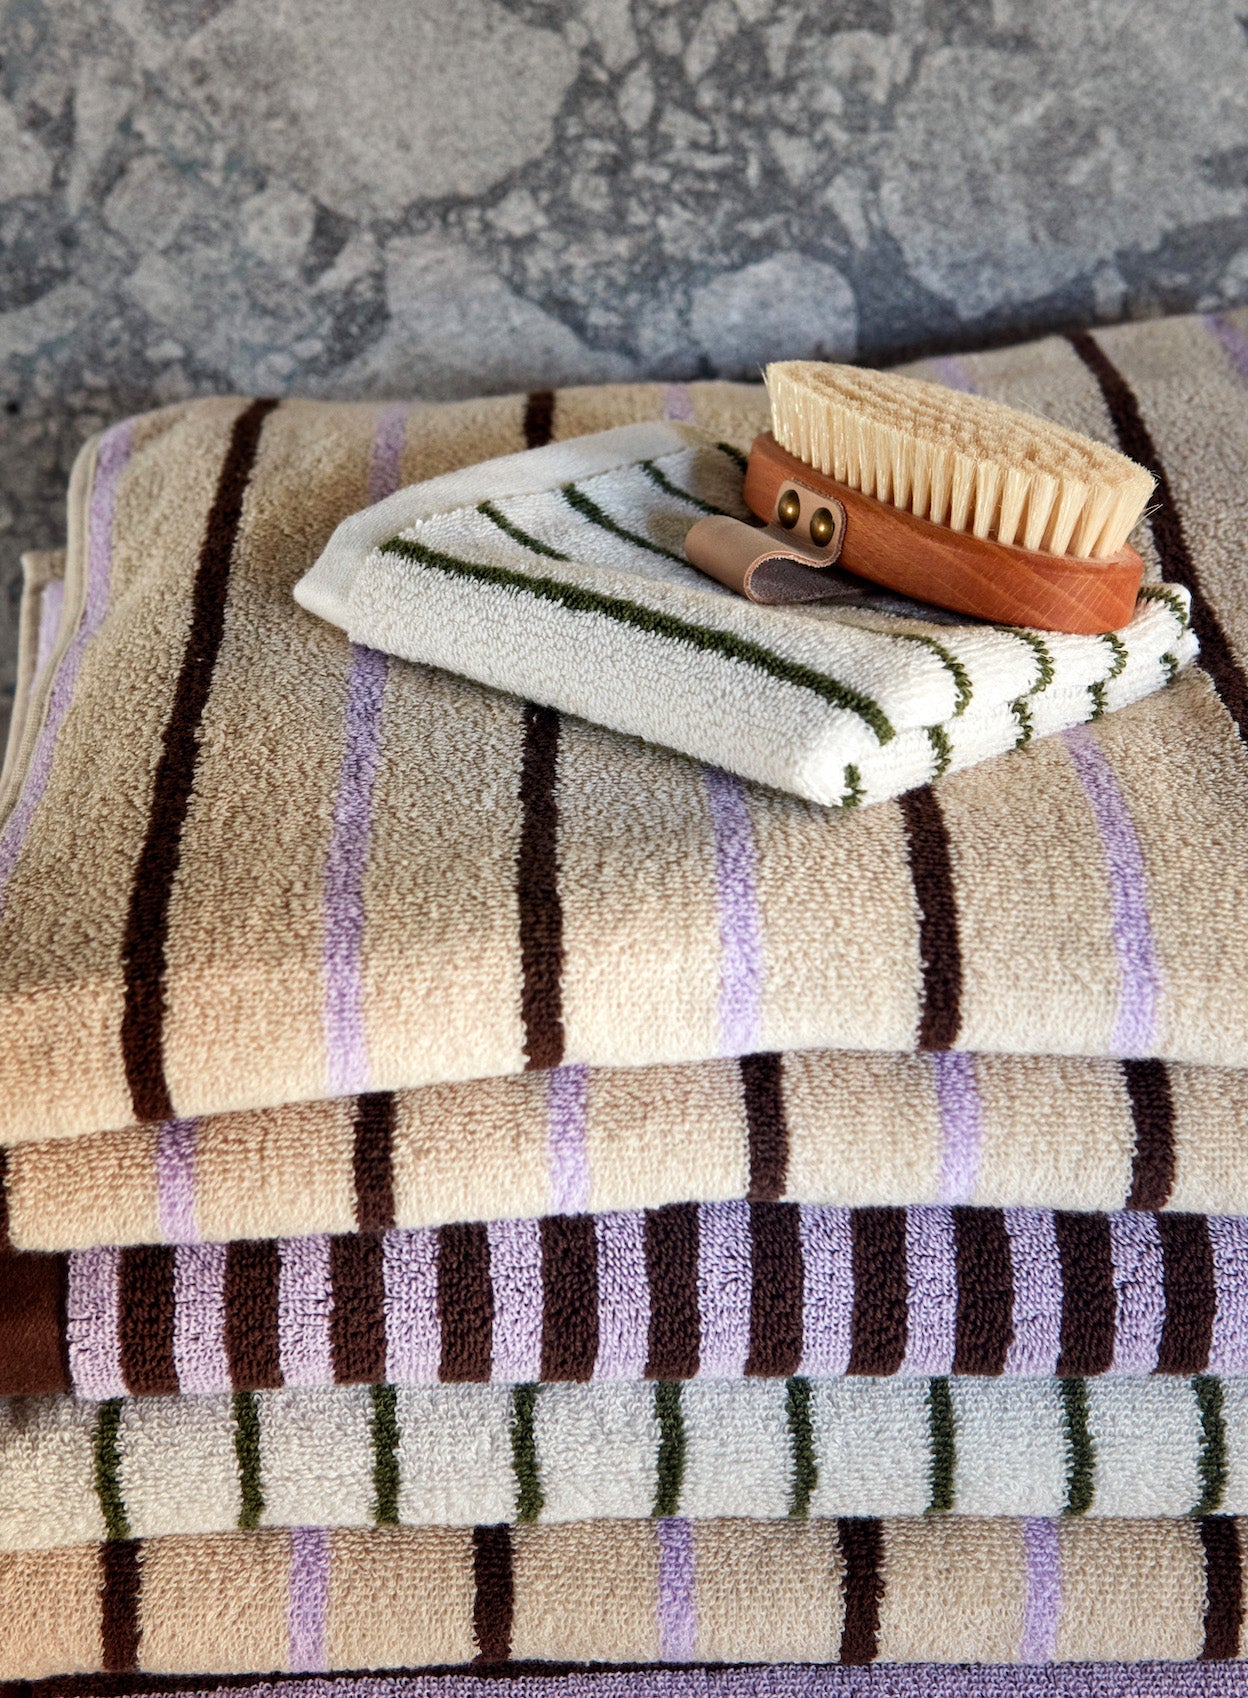 OYOY LIVING Raita Wash Cloth - Pack of 2 Towel